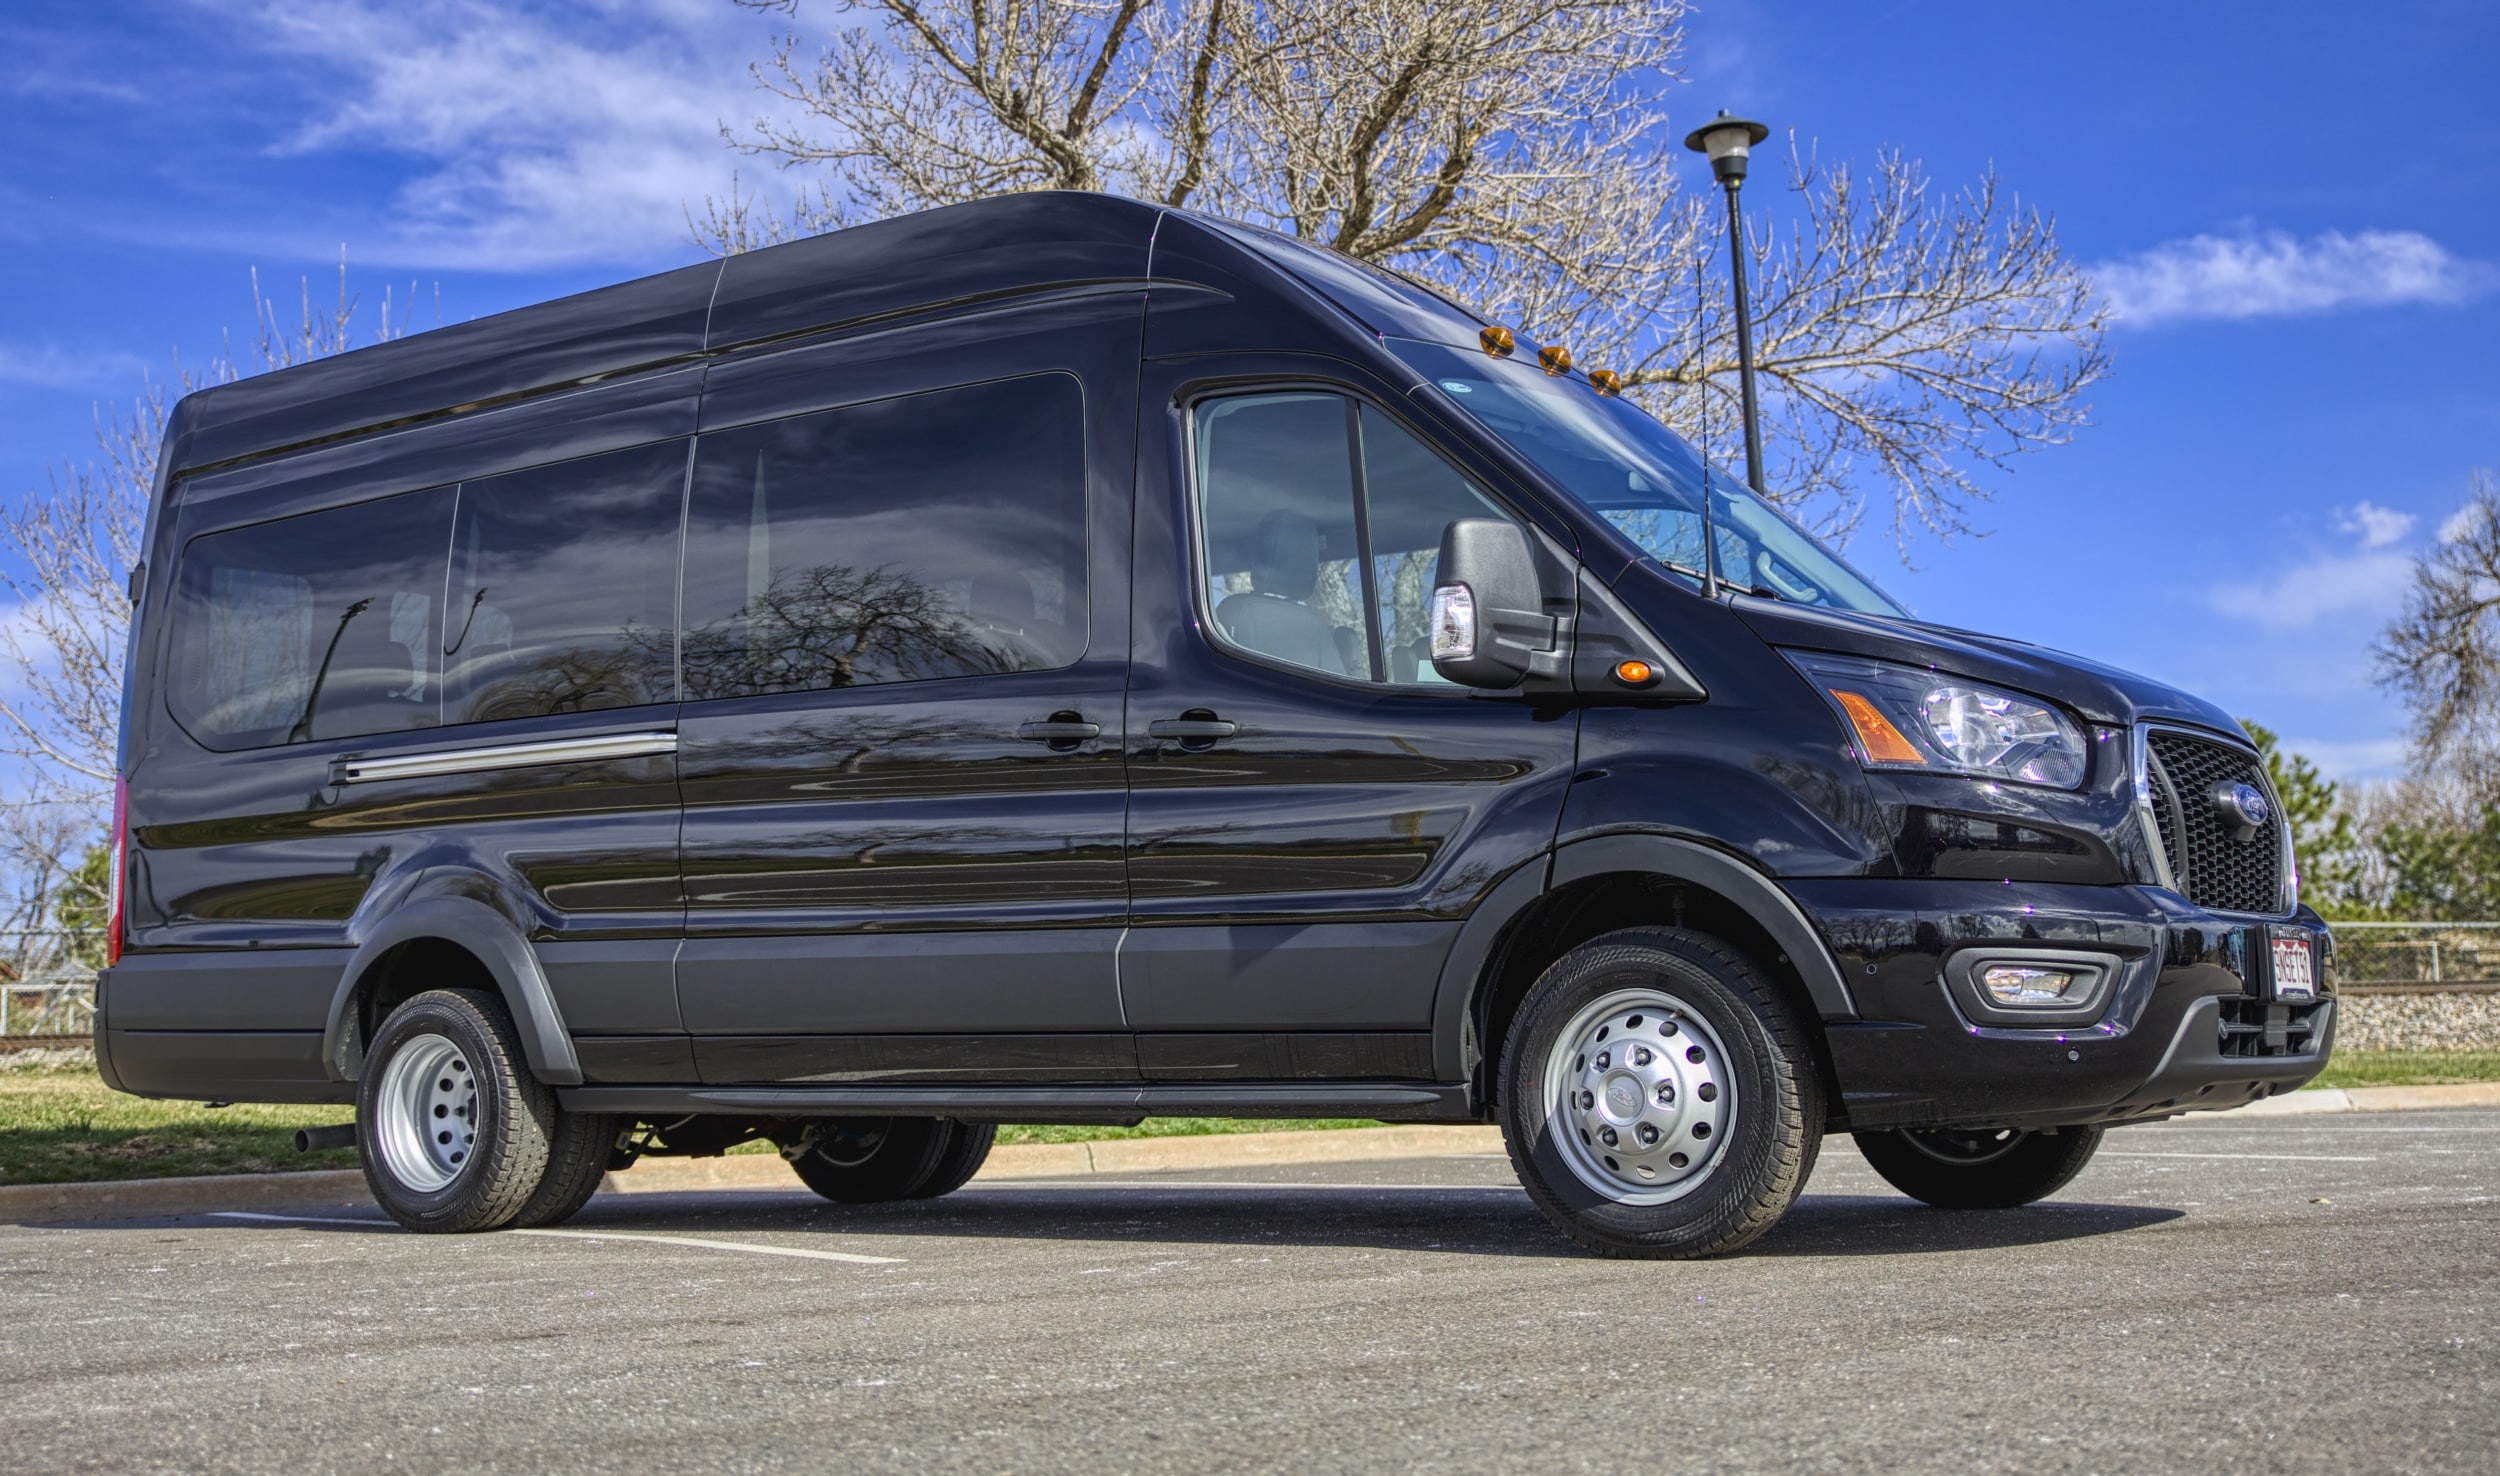 A light gray executive van with dark windows and tires.